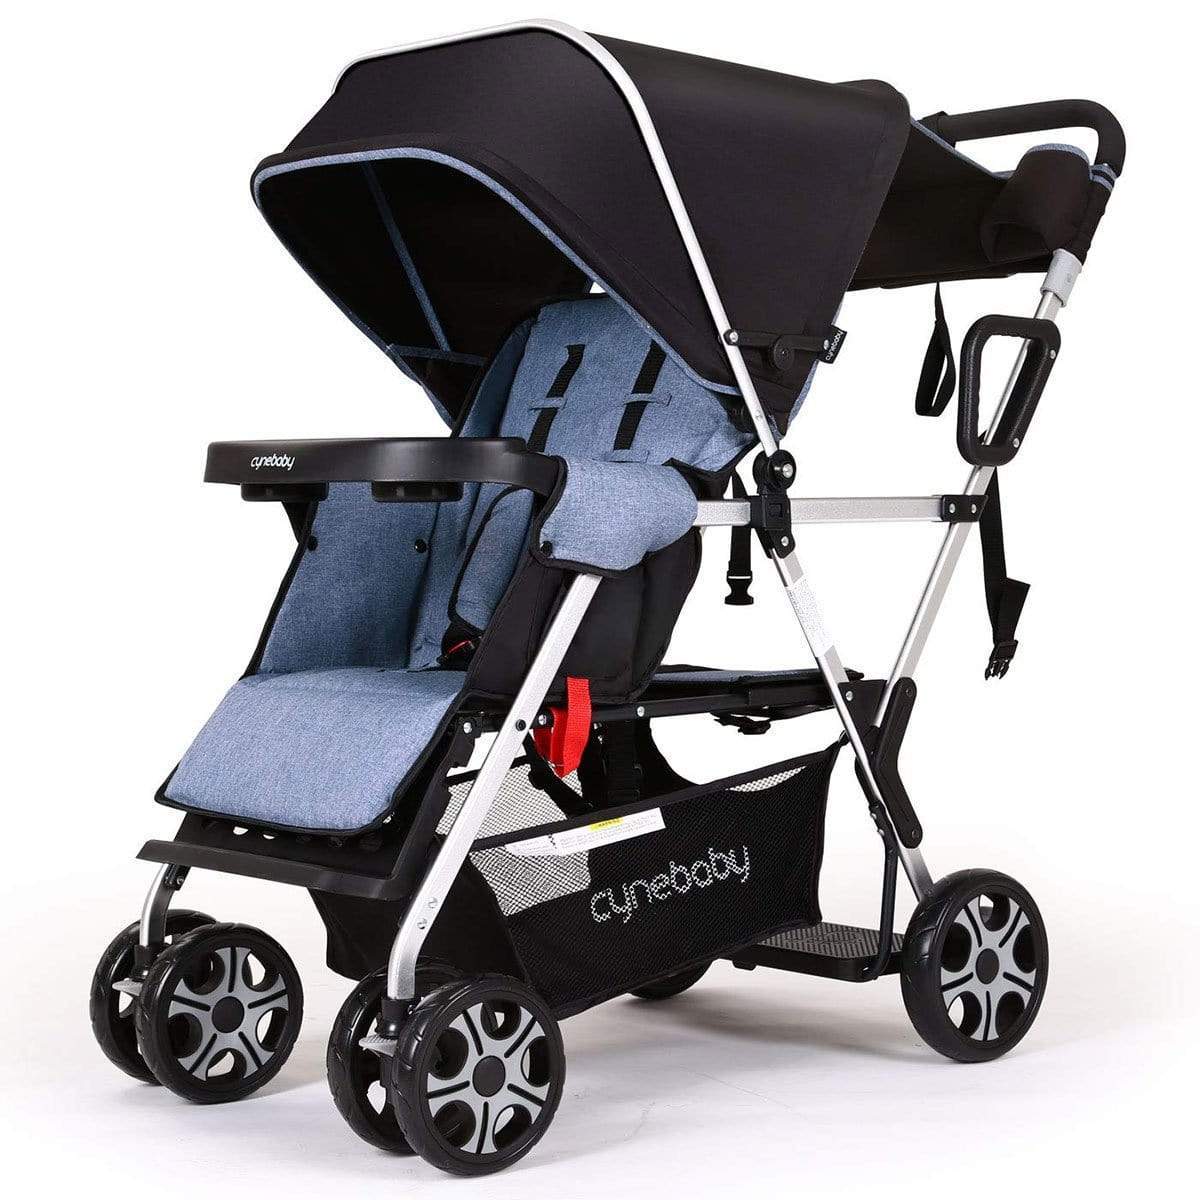 Proactive Baby Baby Pram Stroller cynebaby™ Baby Stroller For 2 babies